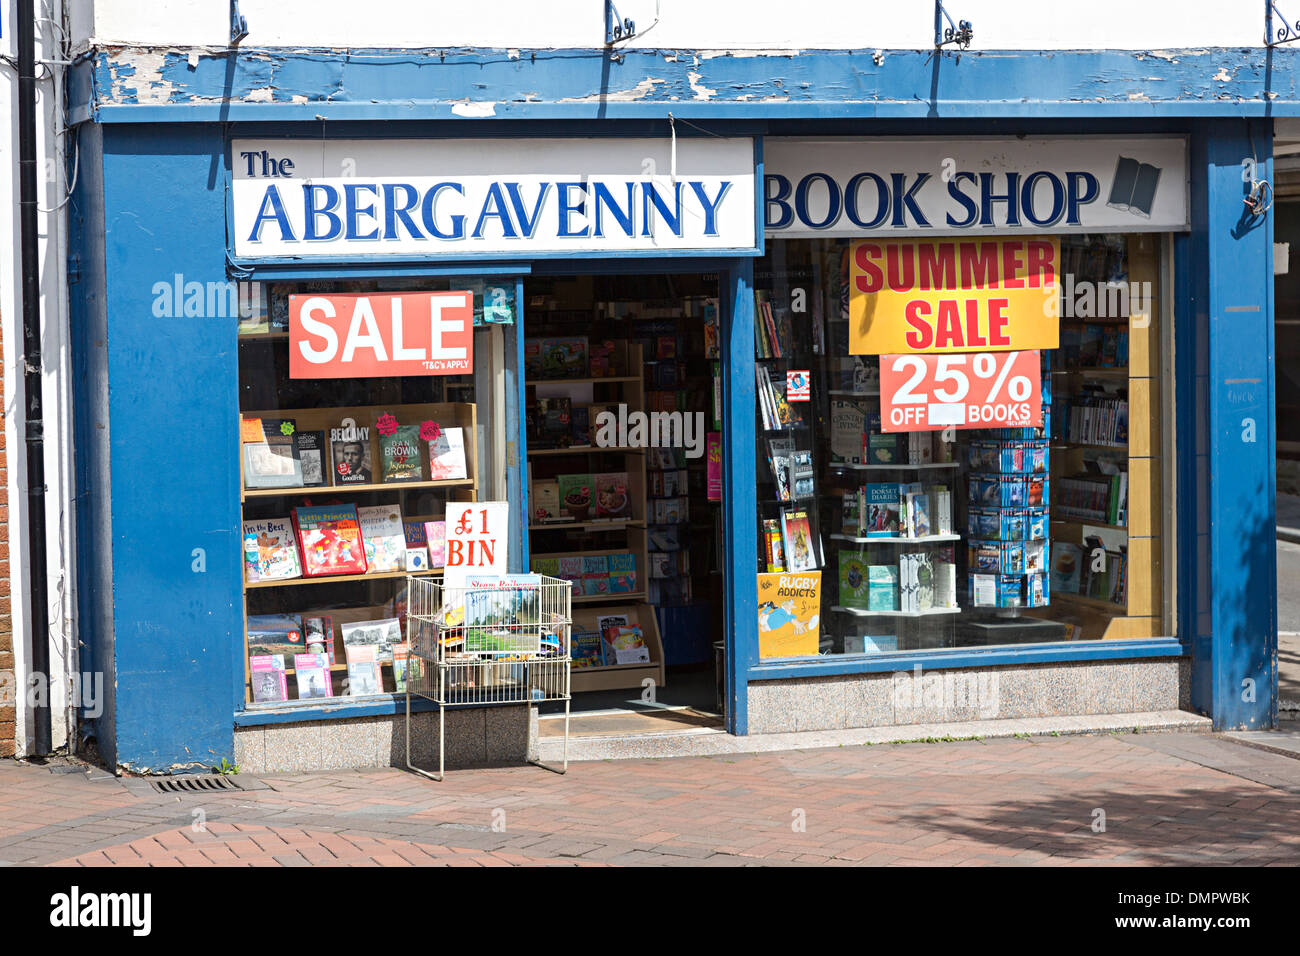 Bookshop with sale sign, Abergavenny, UK Stock Photo